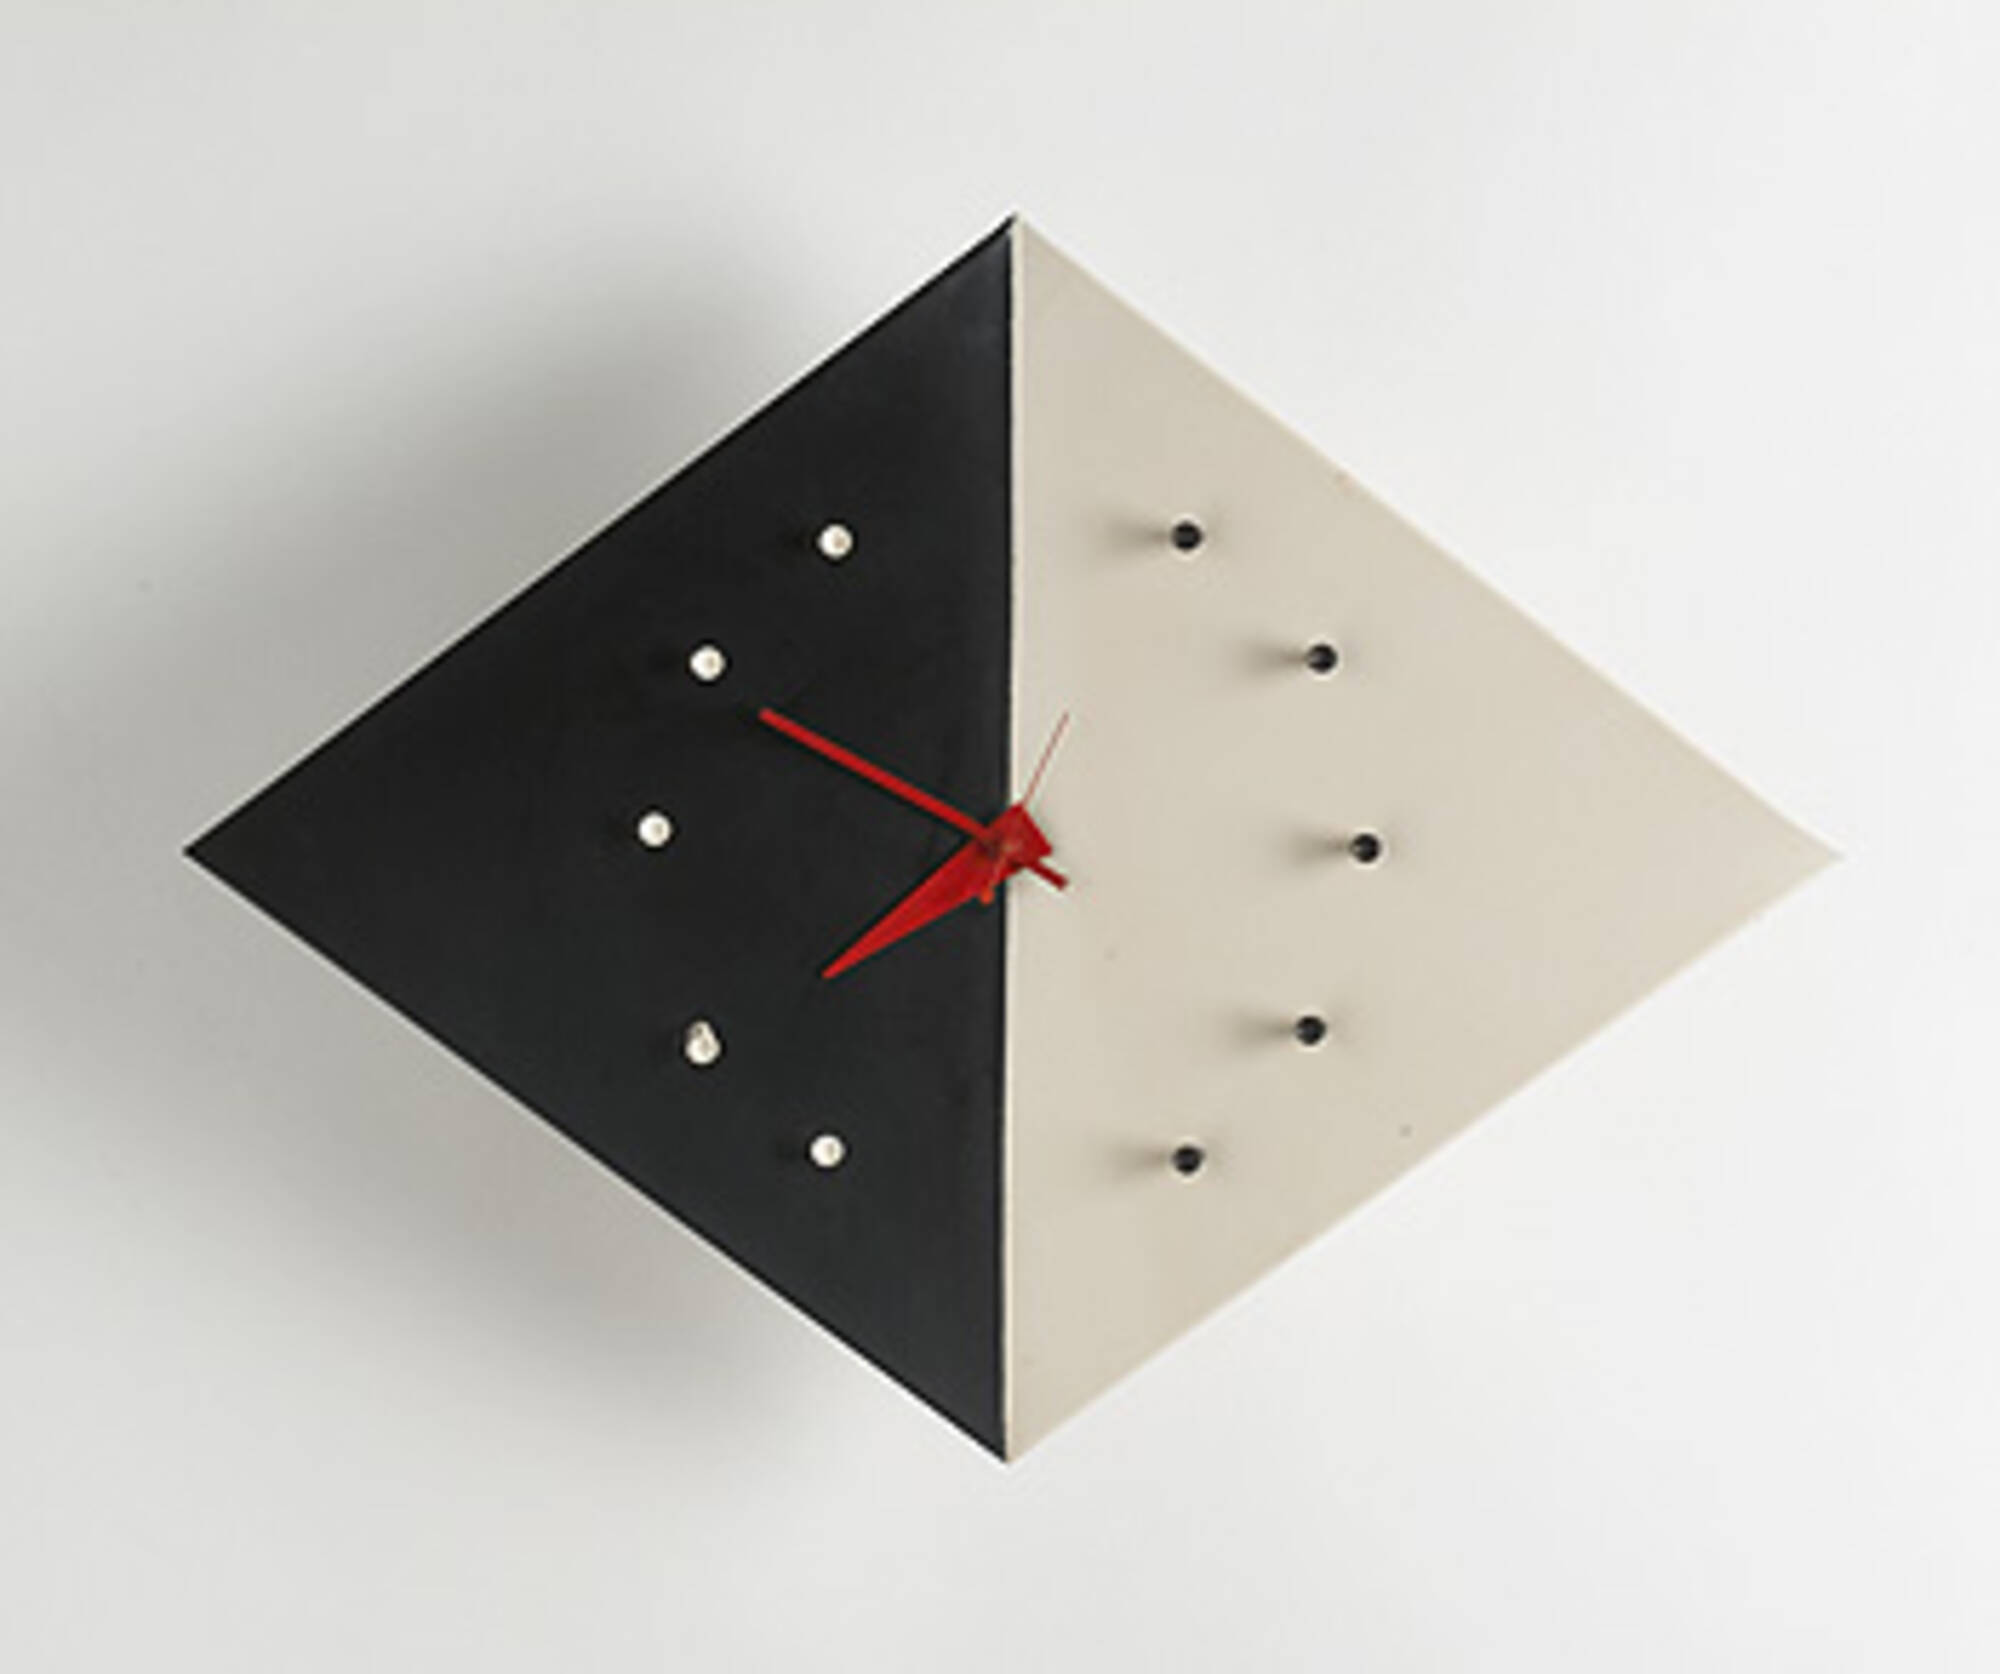 229: GEORGE NELSON & ASSOCIATES, Kite wall clock, model #2201-D